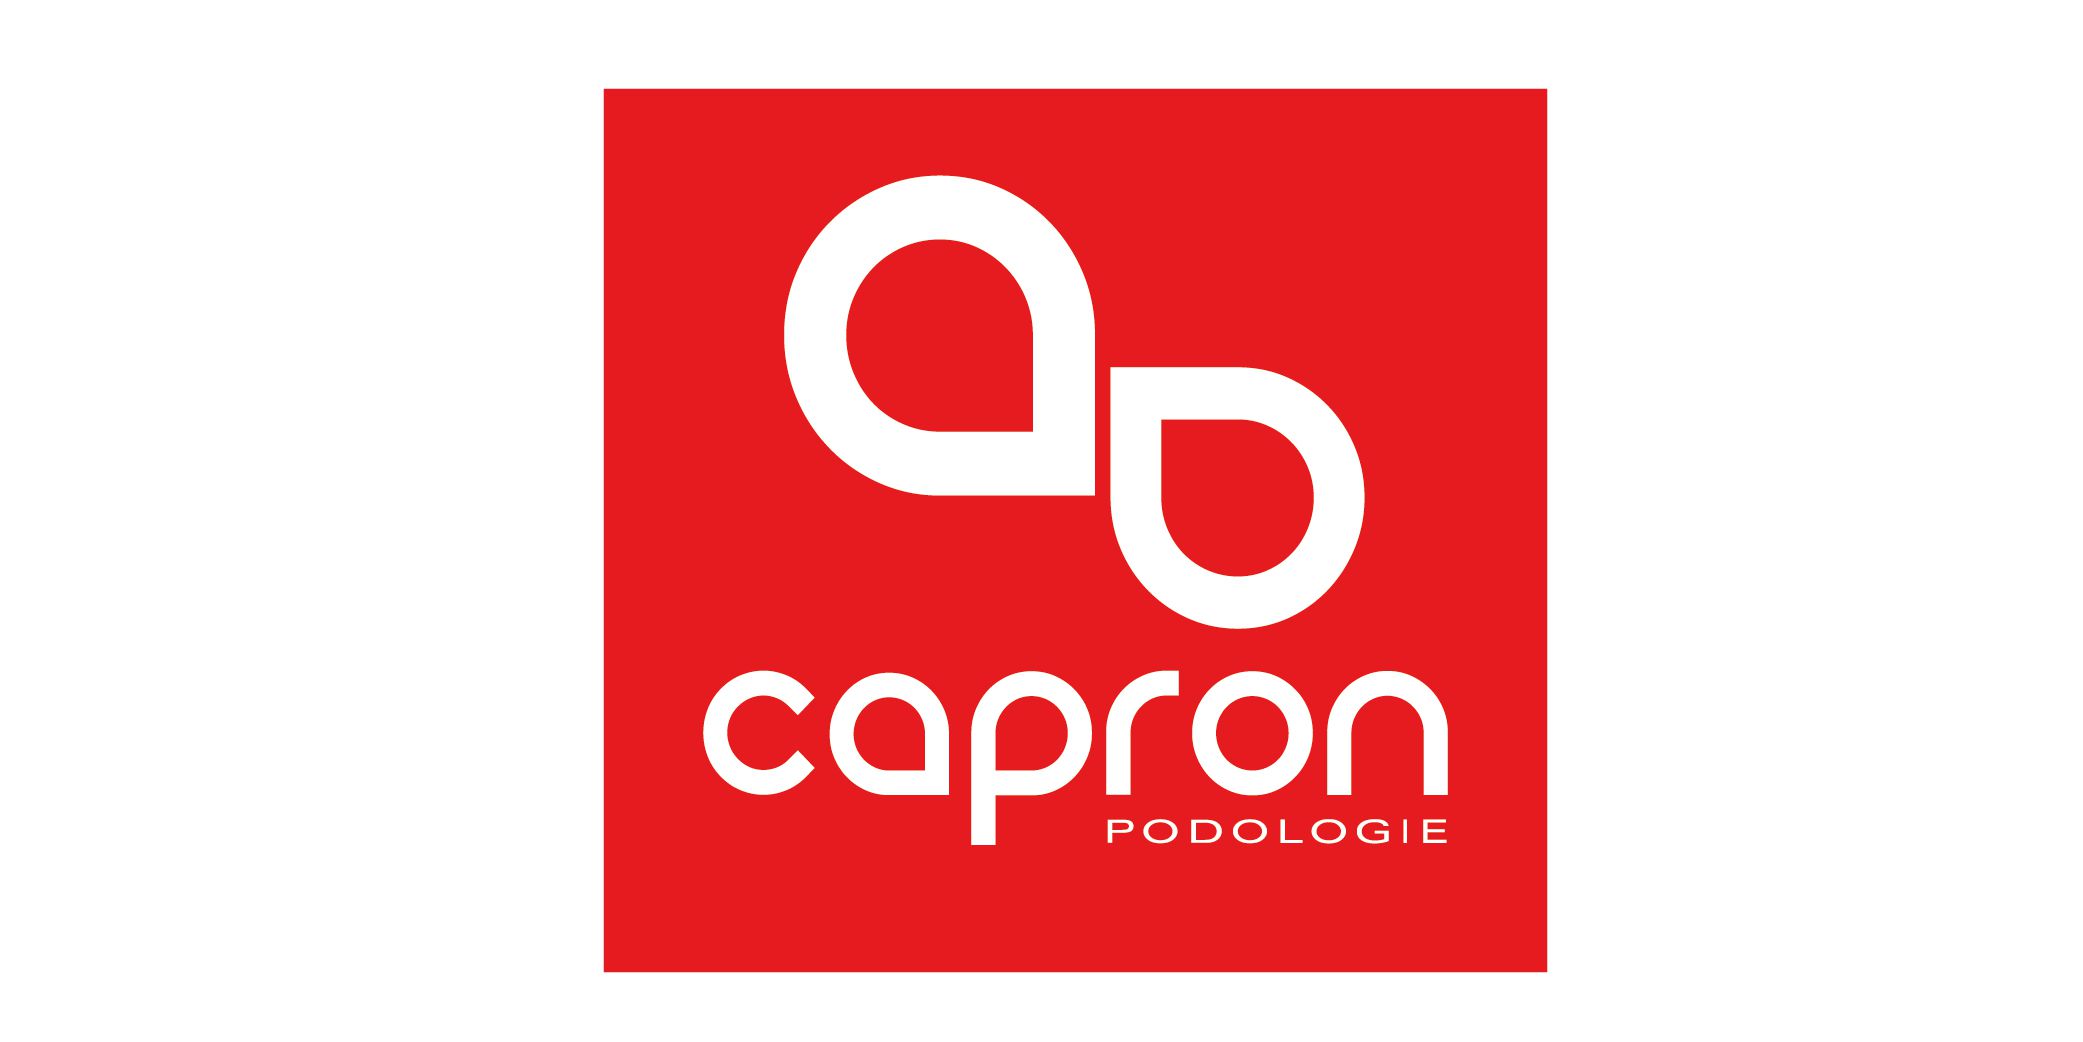 Capron